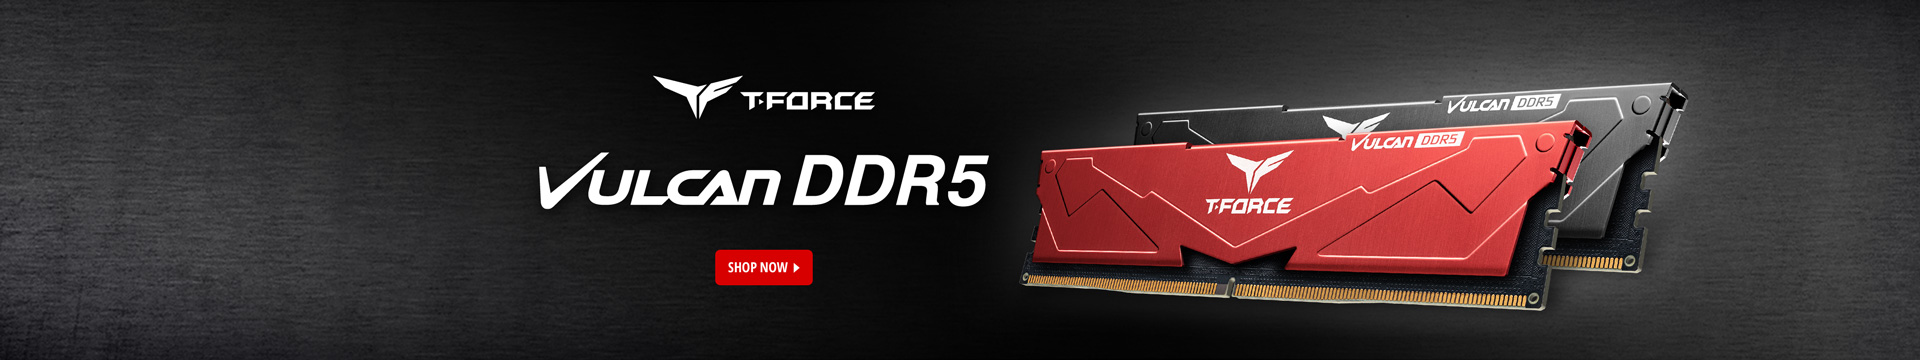 Vulcan DDR5